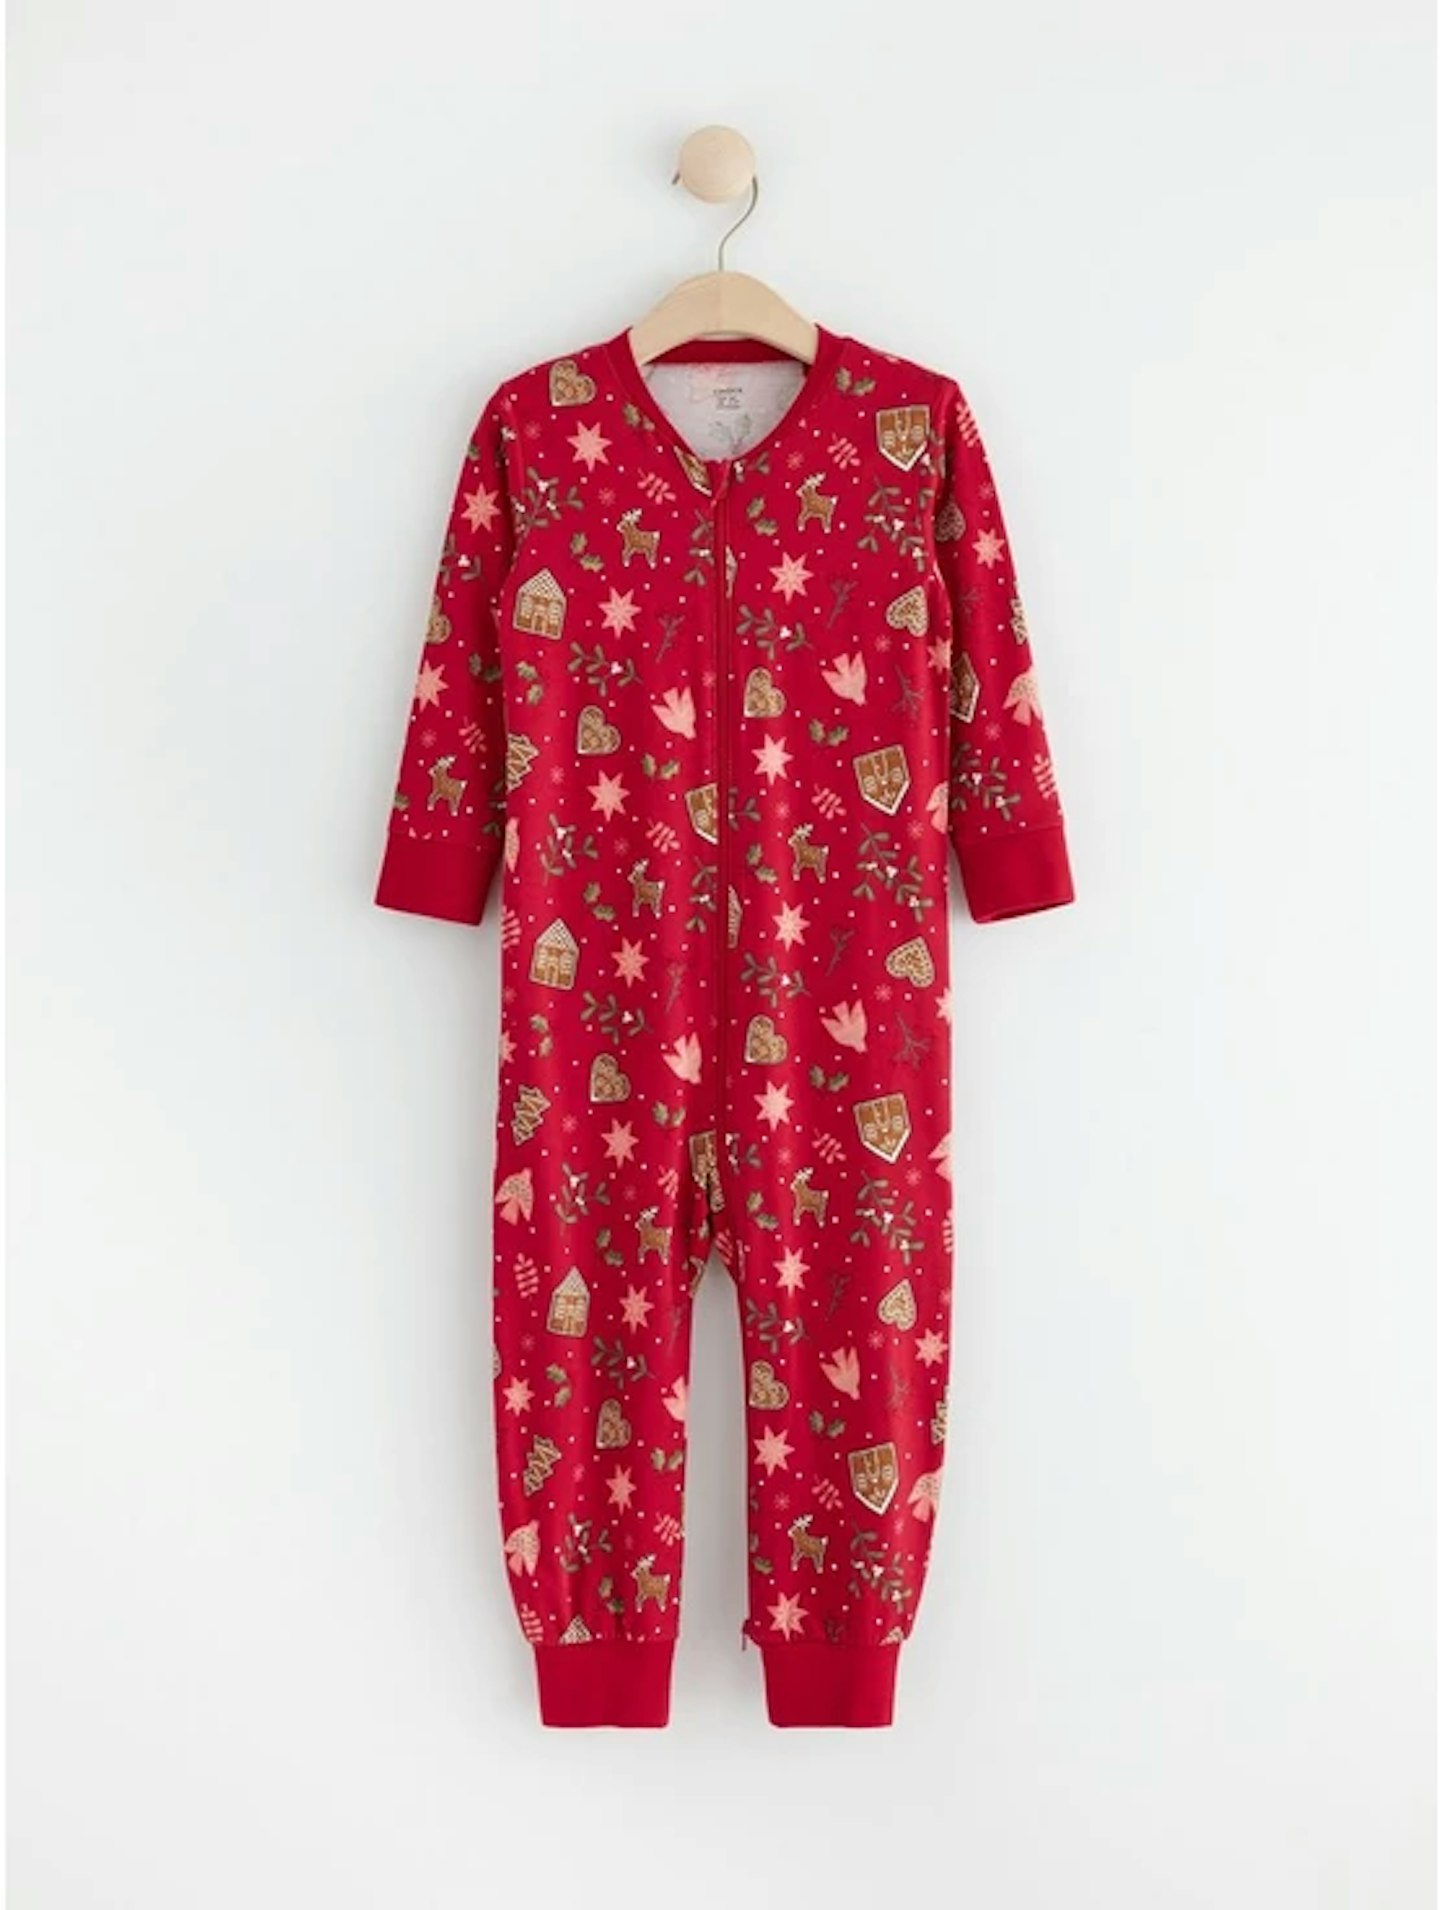 Lindex Pyjamas - baby sleepwear and sleepsuits